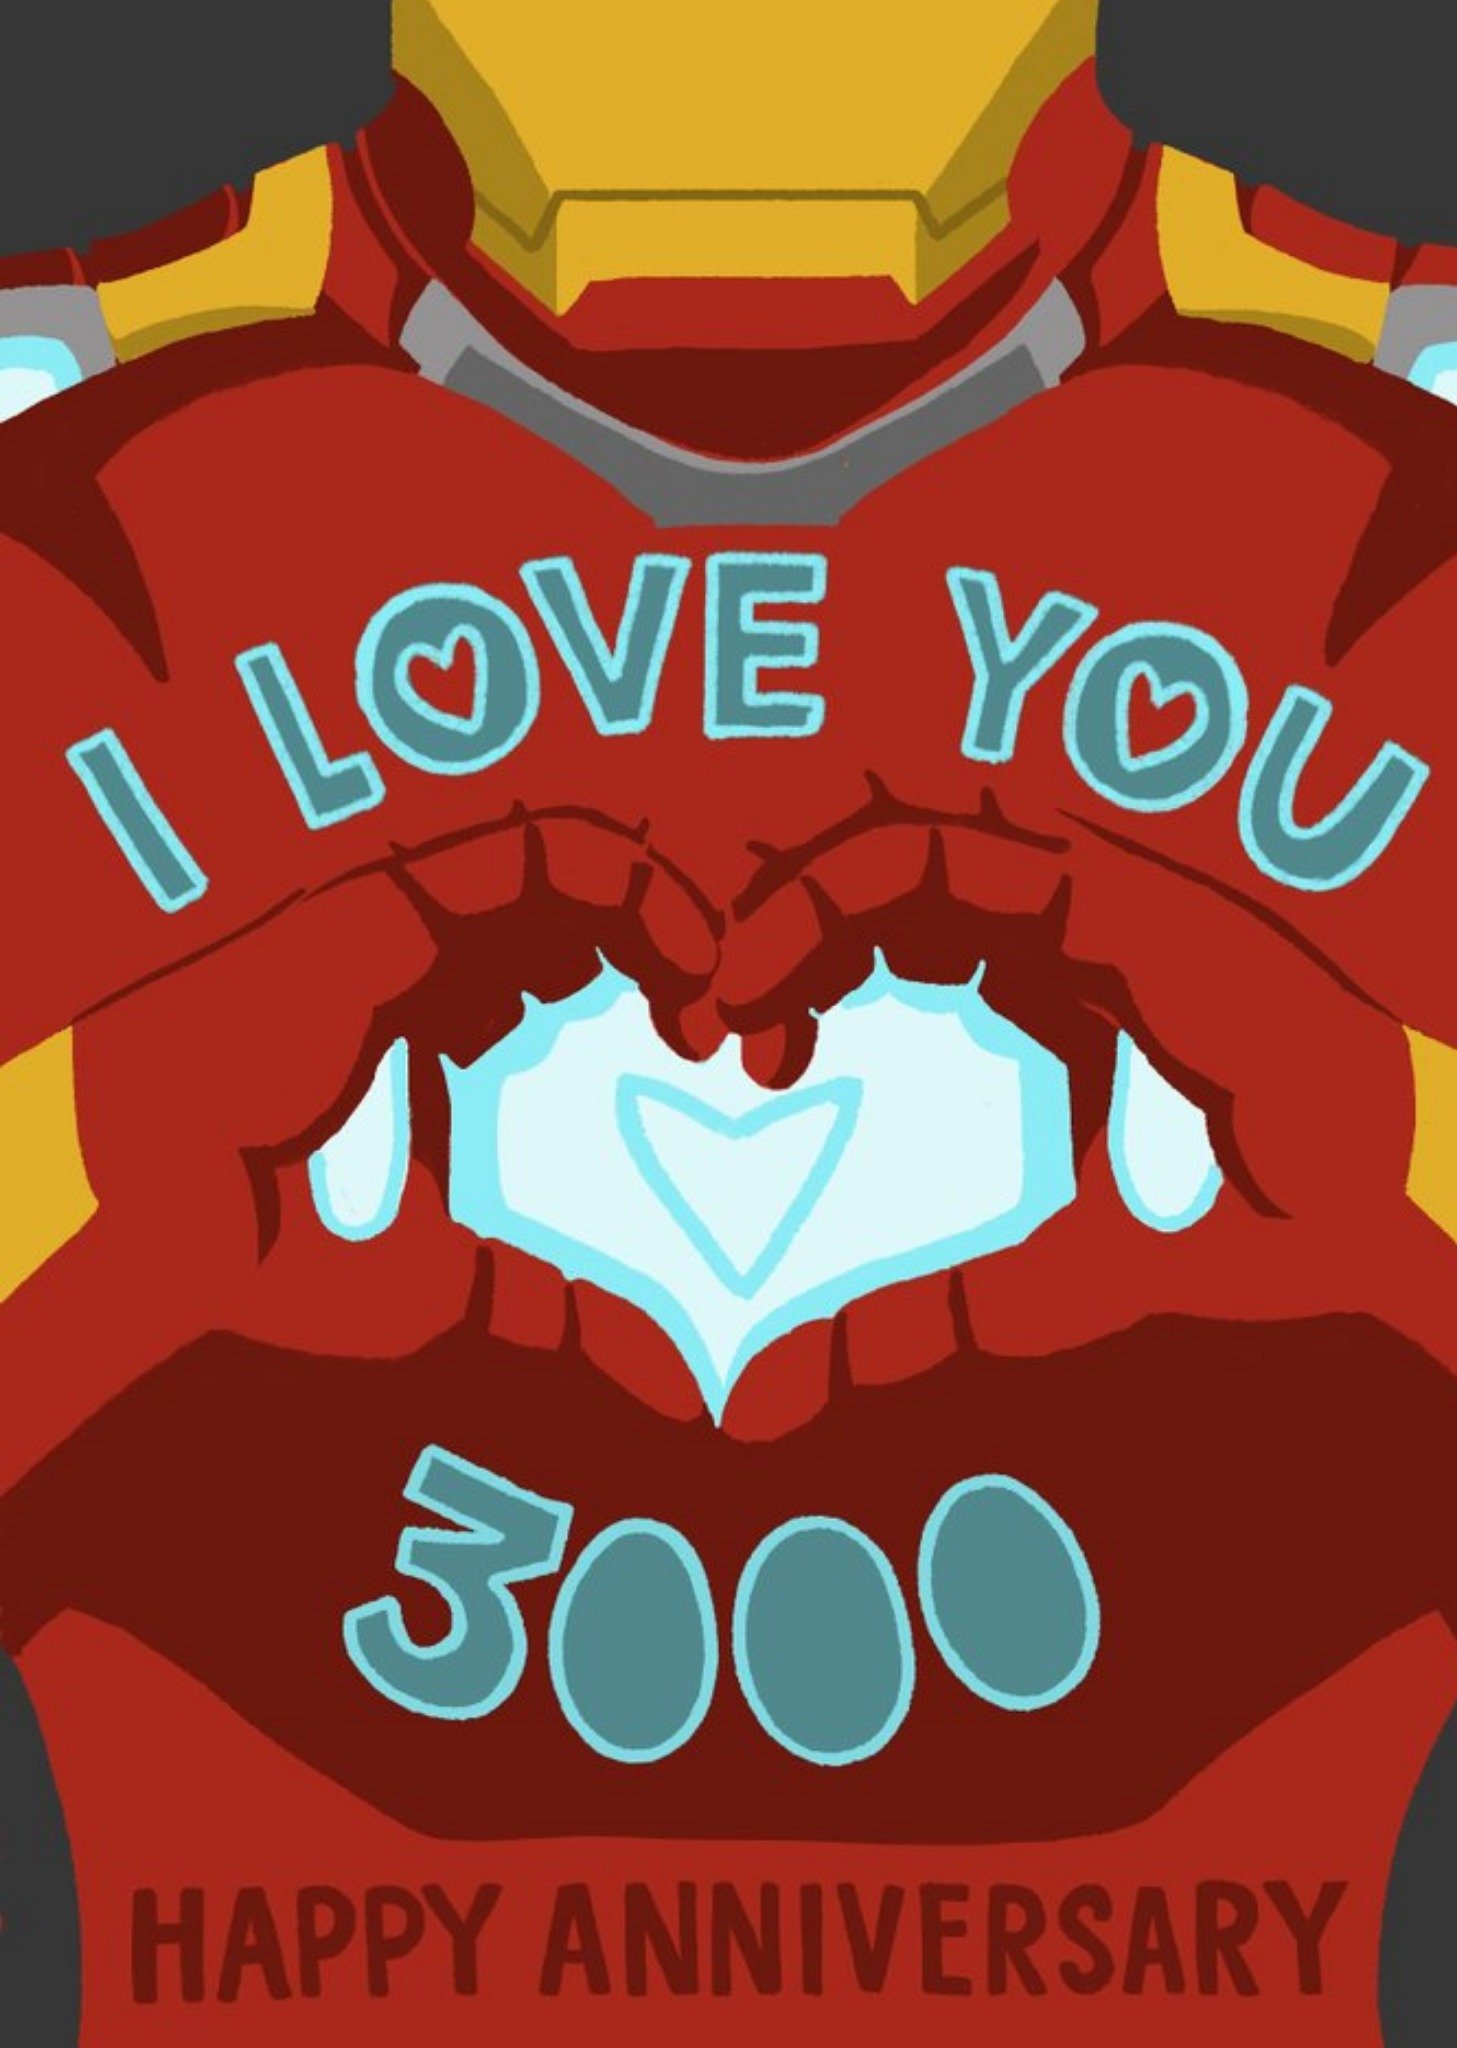 Disney Marvel Comics Iron Man - I Love You 3000 - Anniversary Card, Large